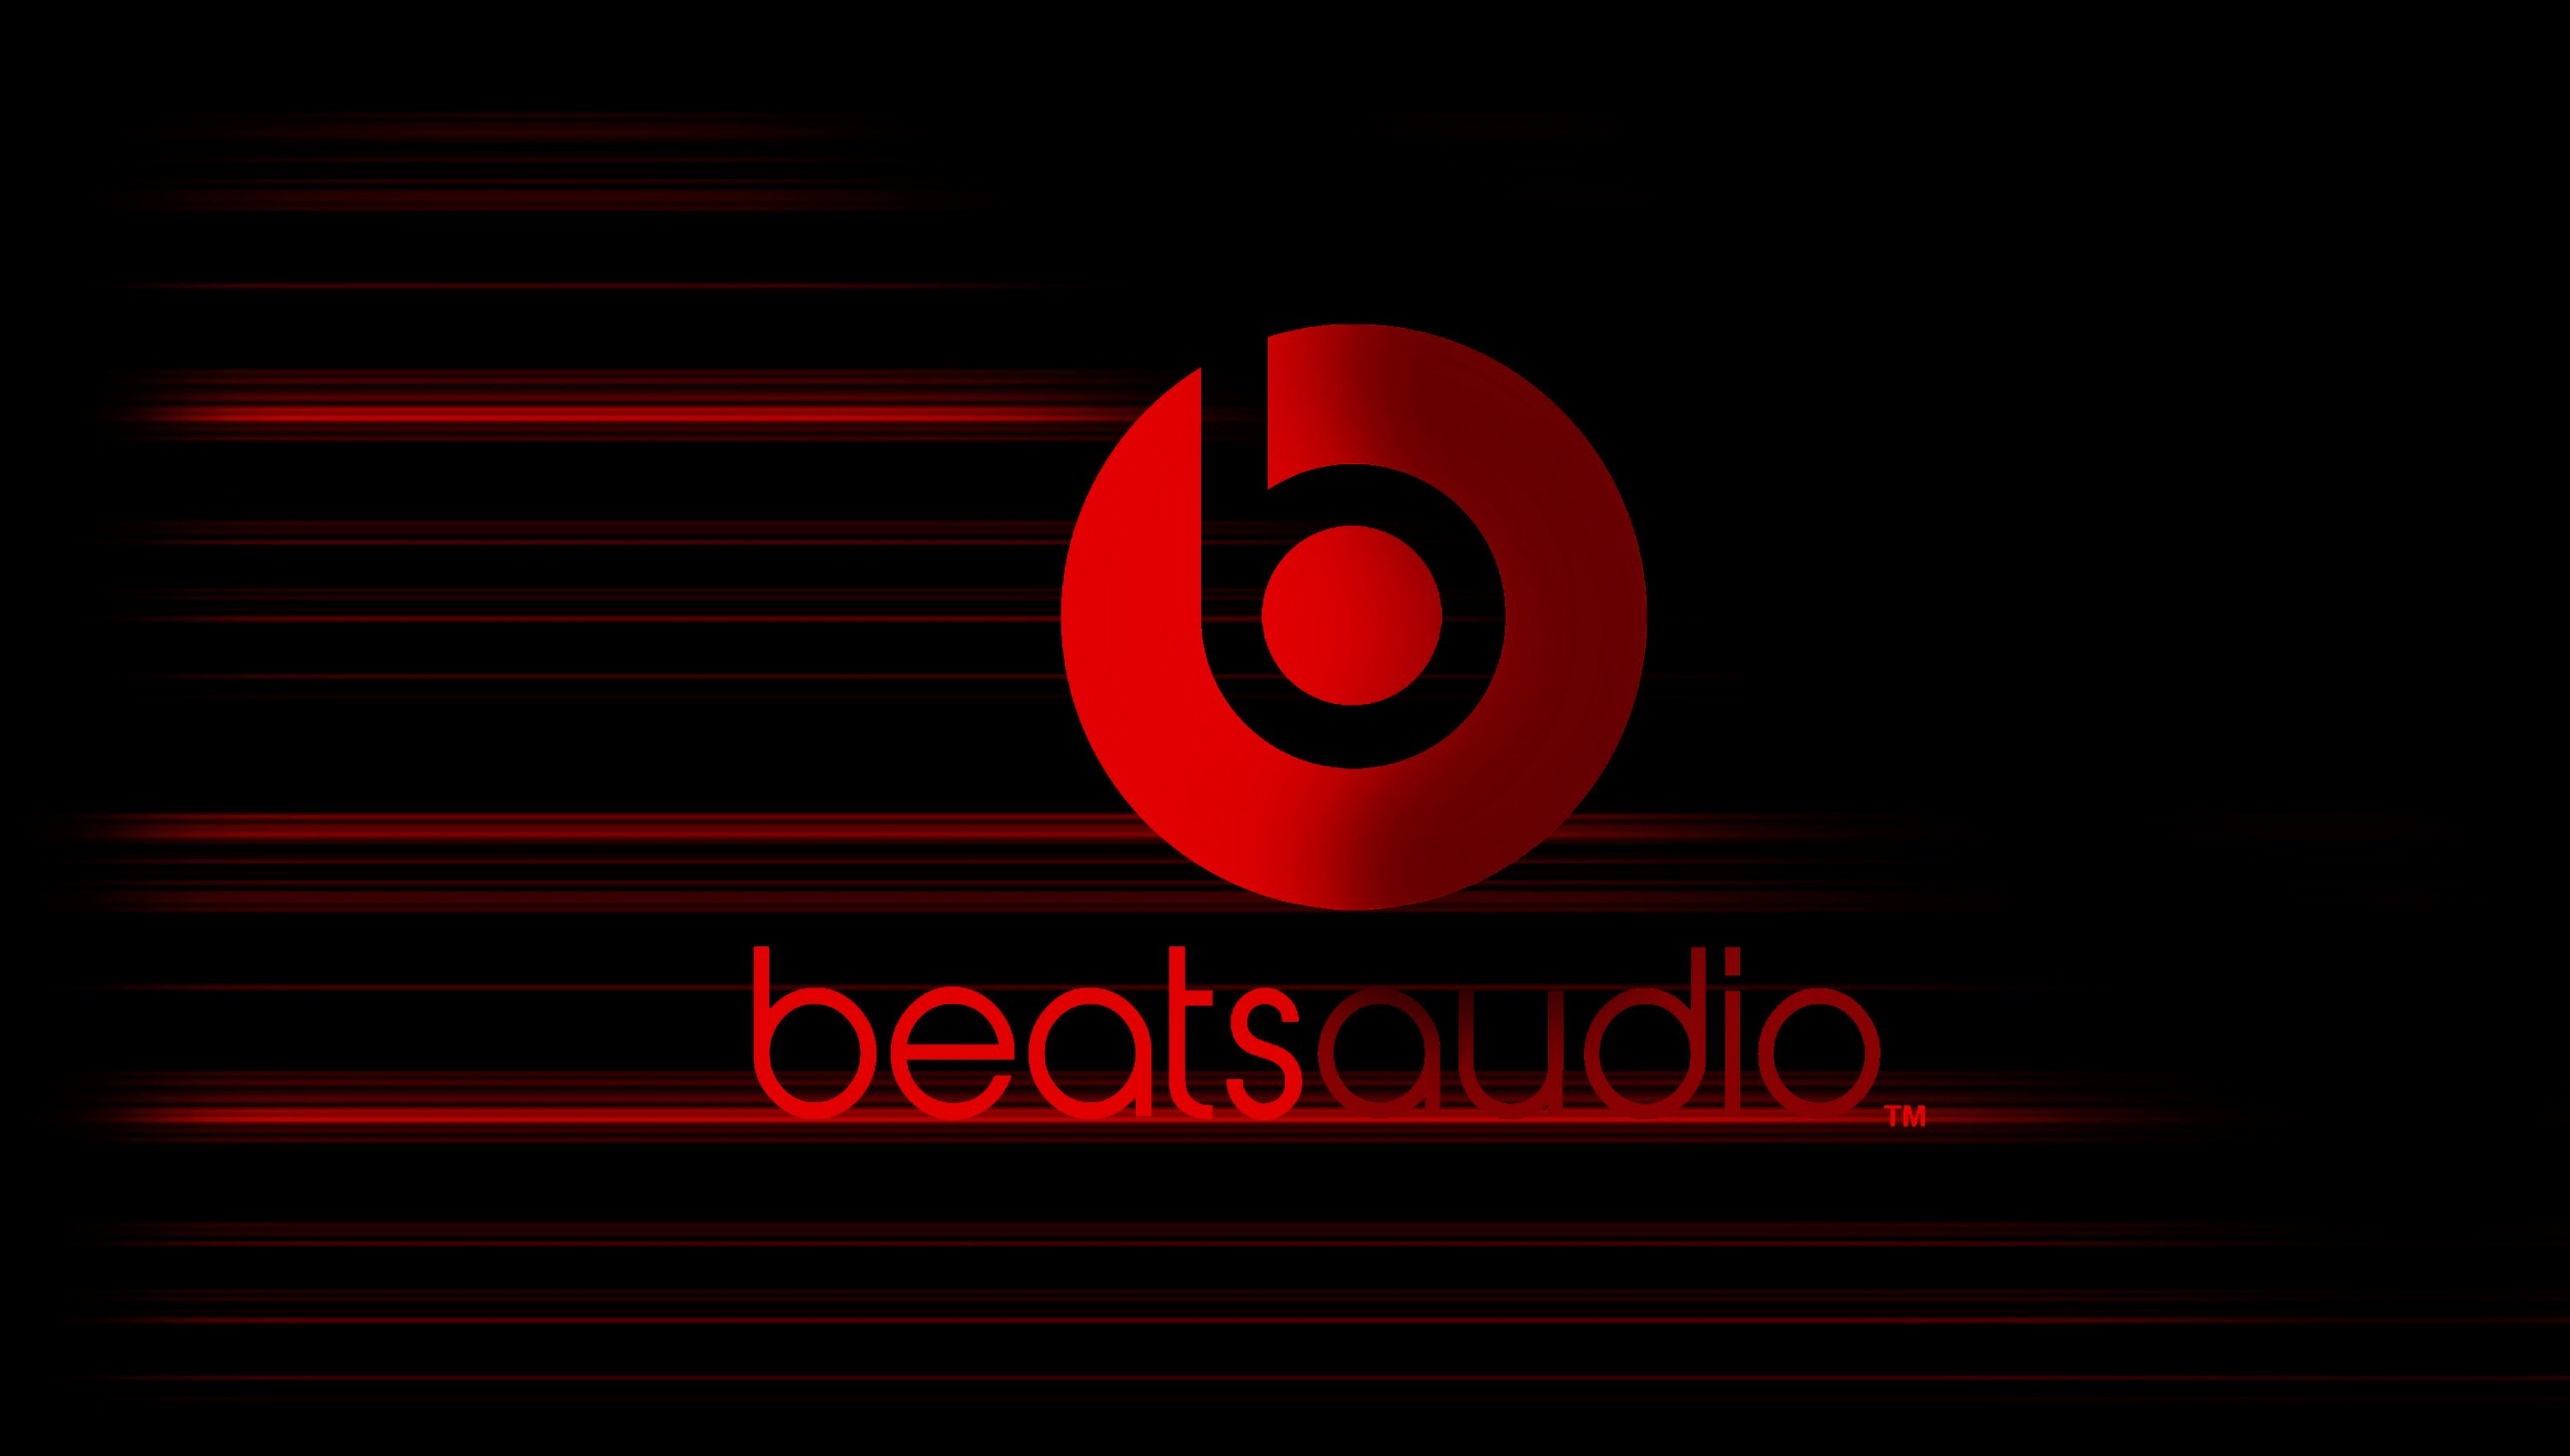 By Dr Dre, Beatsaudio, Beats Audio, Htc Desktop Background - Beats Electronics , HD Wallpaper & Backgrounds